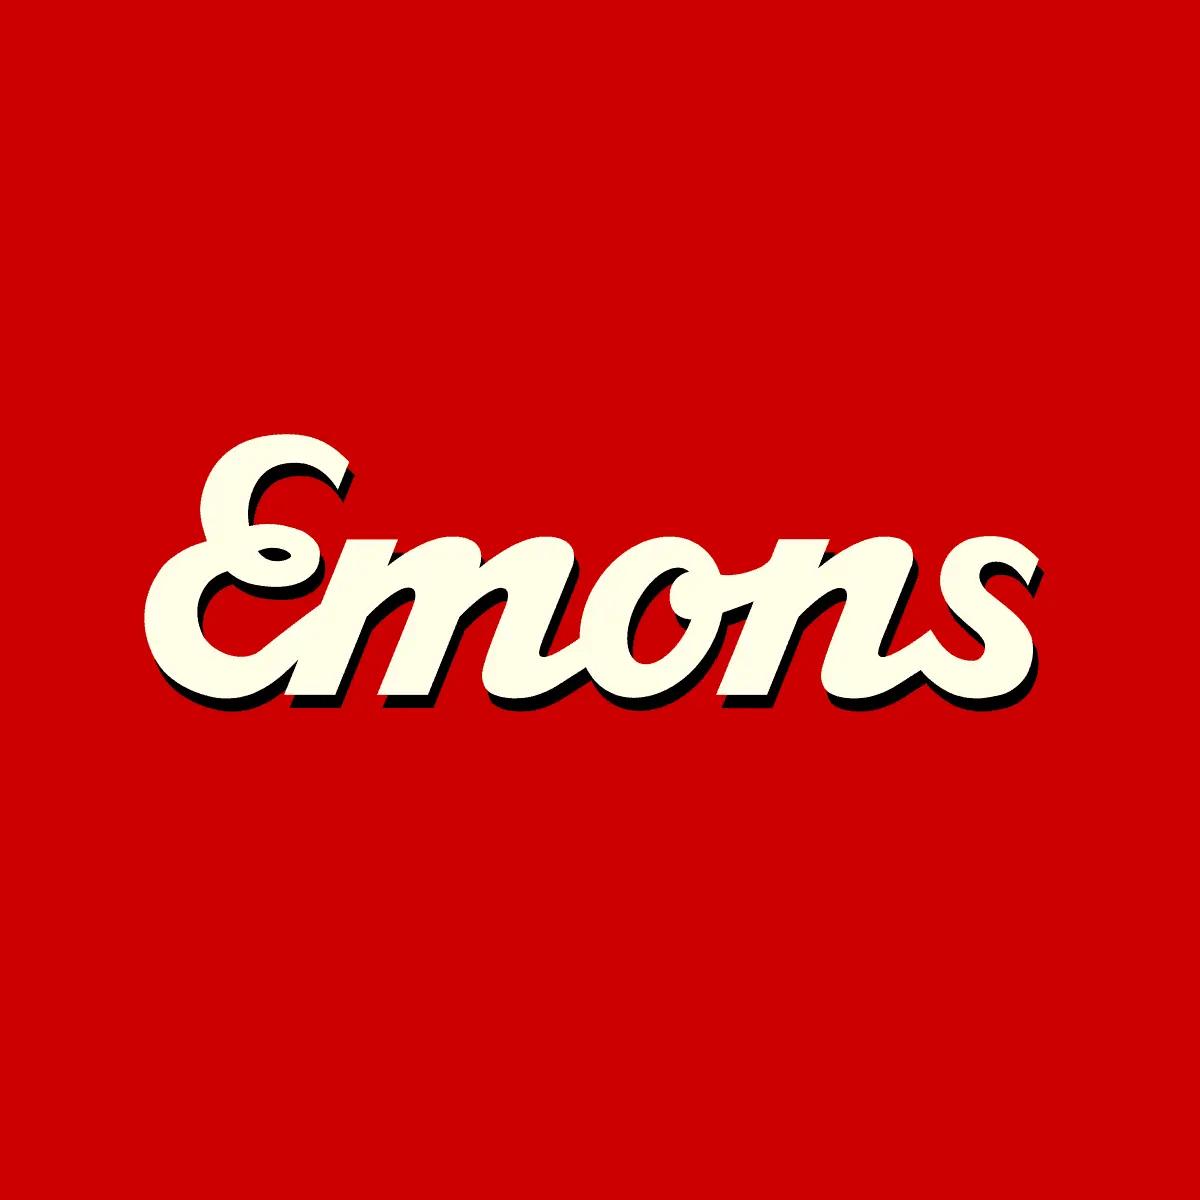 Emons Transporte GmbH